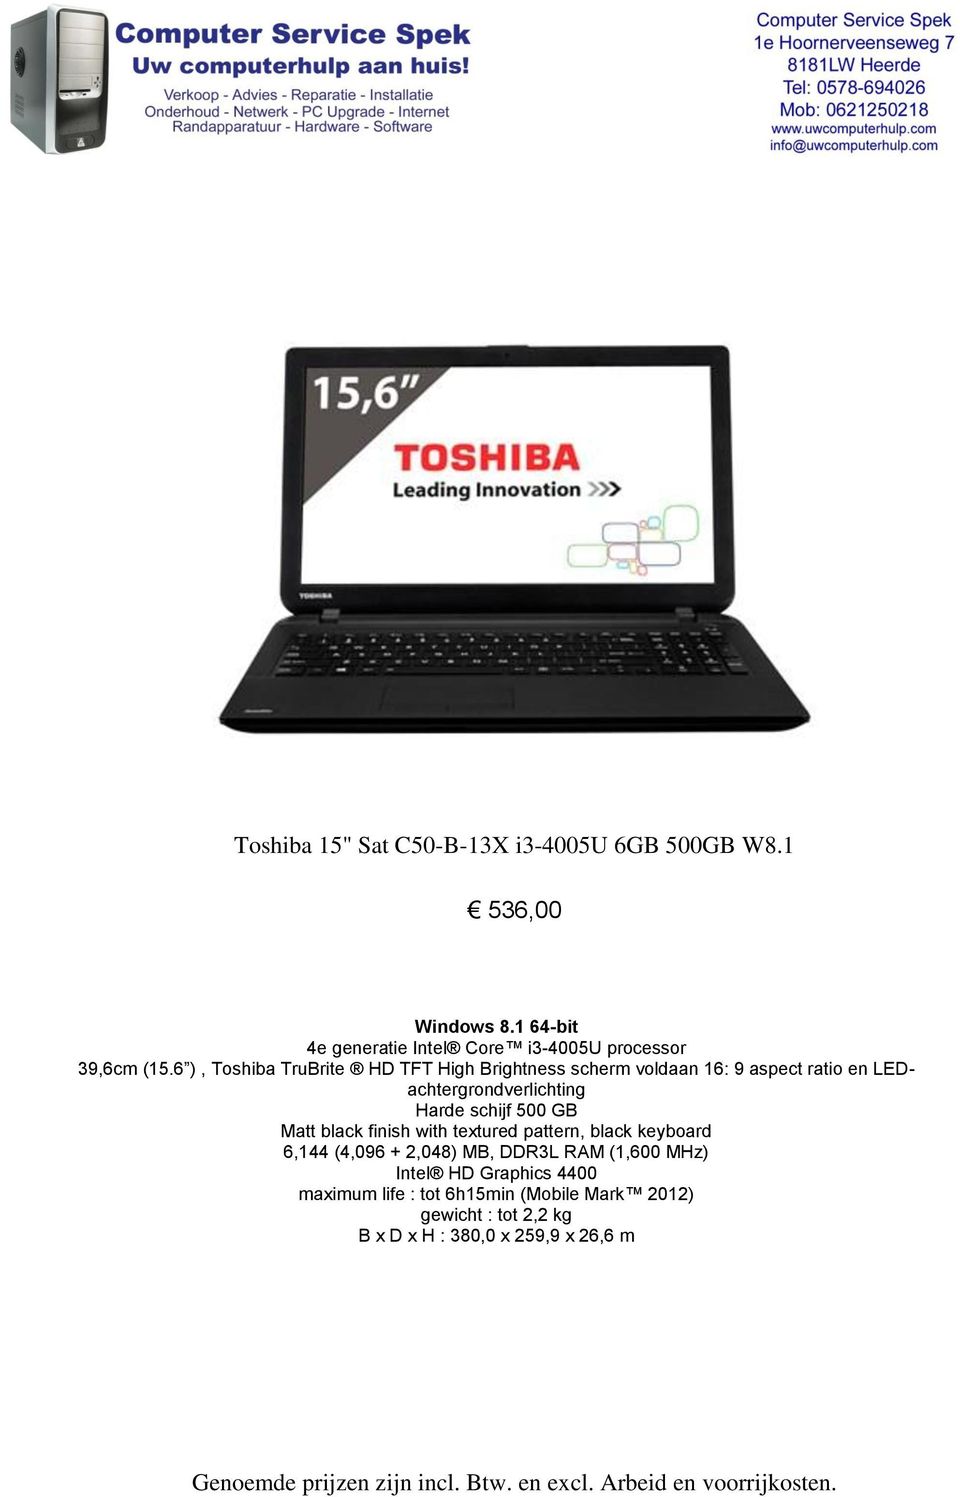 6 ), Toshiba TruBrite HD TFT High Brightness scherm voldaan 16: 9 aspect ratio en LEDachtergrondverlichting Harde schijf